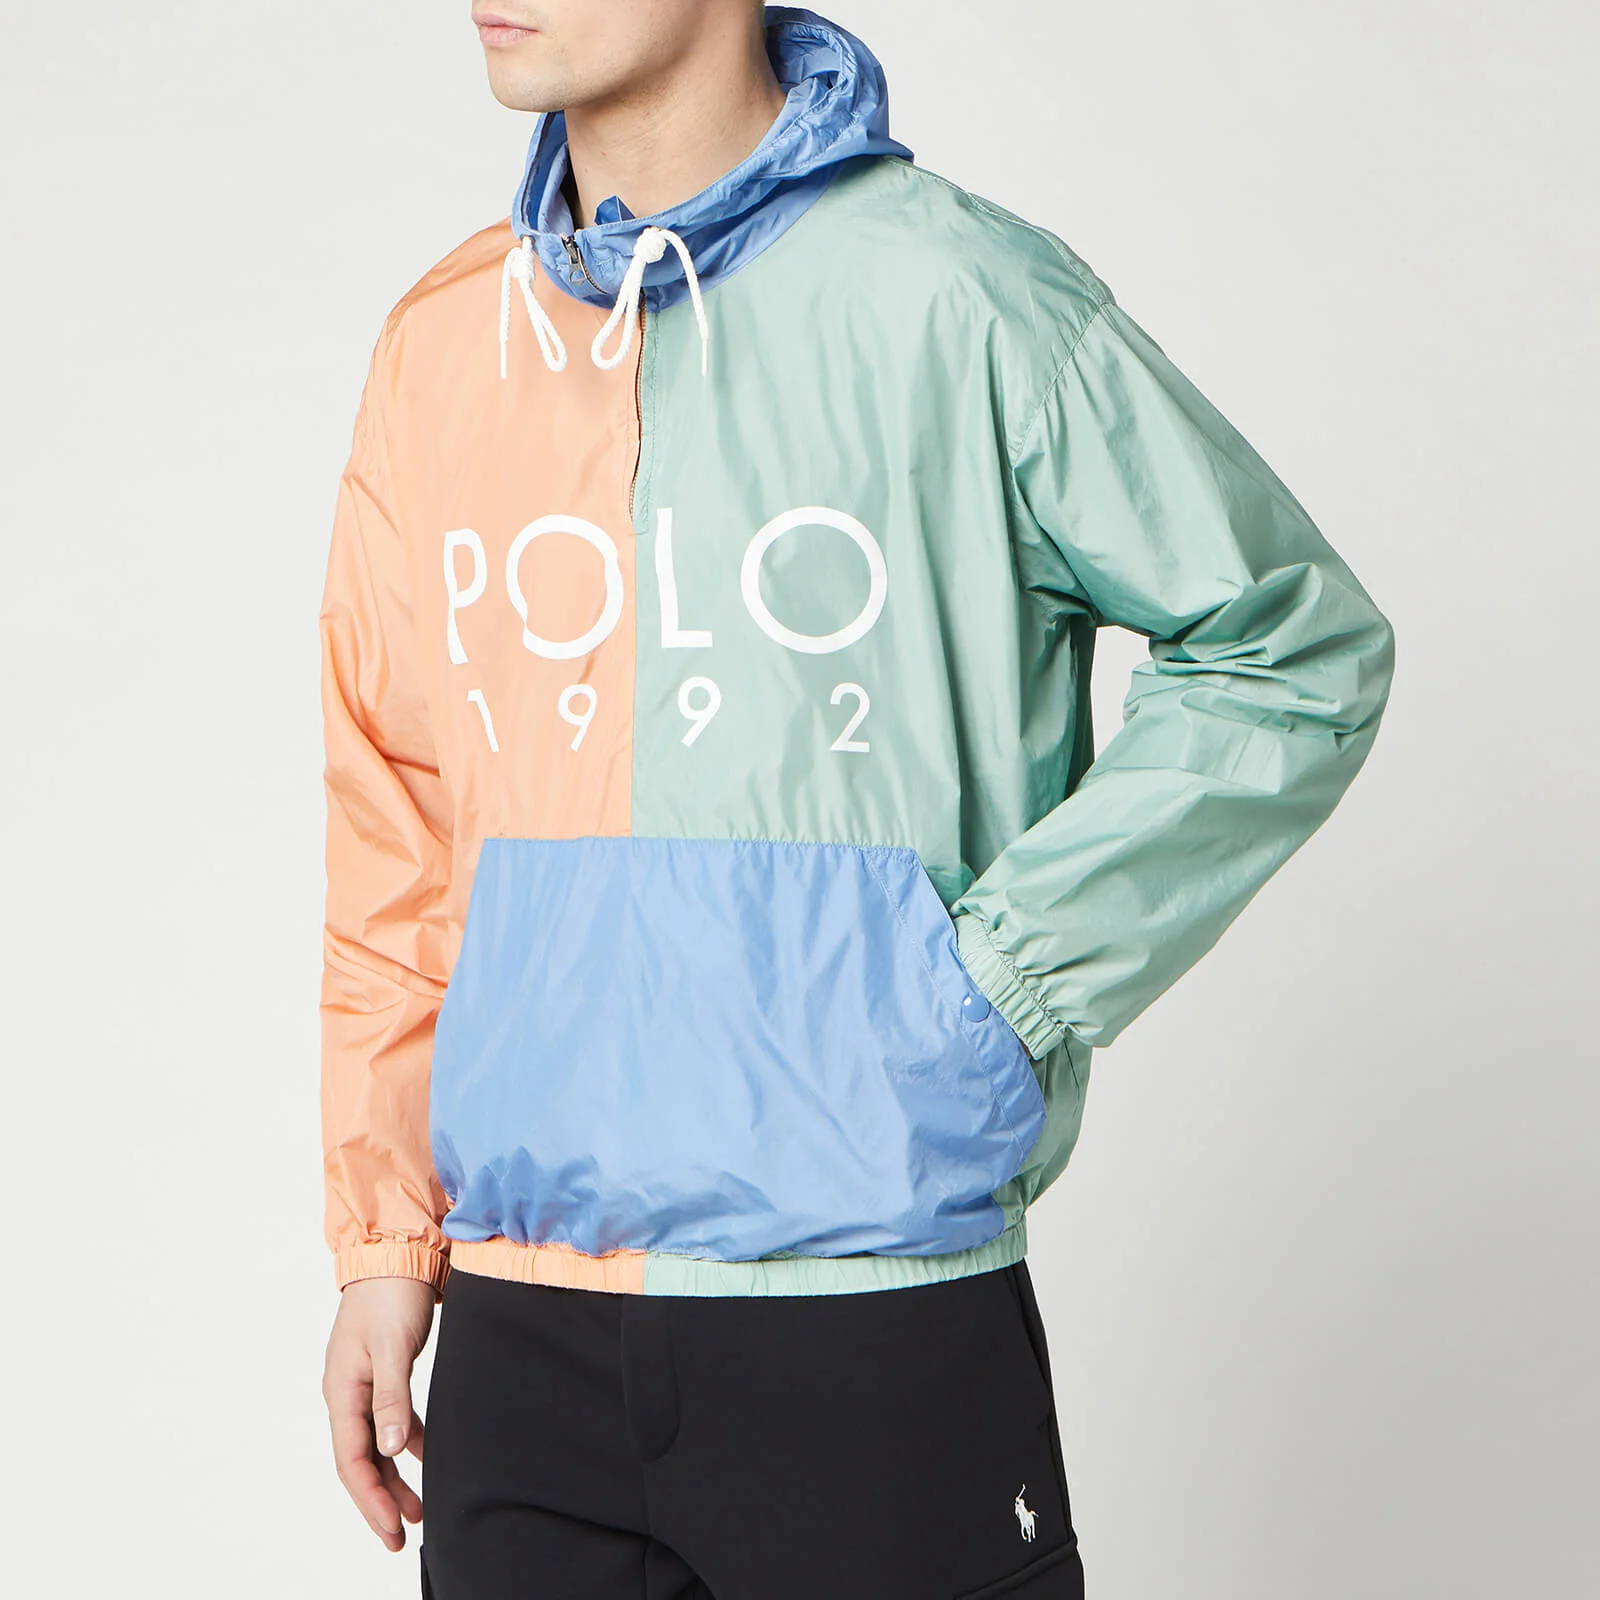 Polo Ralph Lauren Men's Colourblock Windbreaker - Multi Image 1